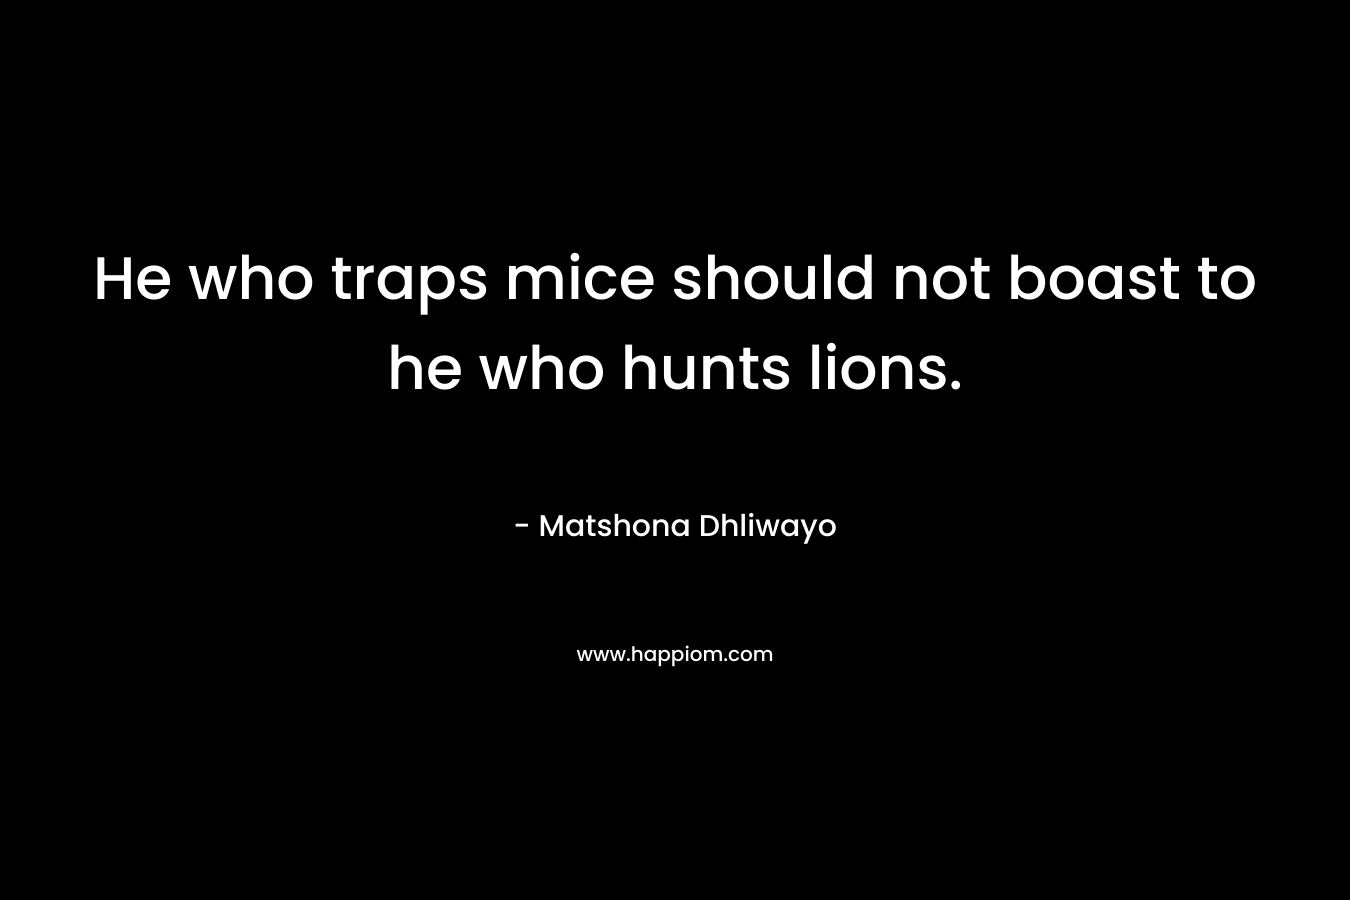 He who traps mice should not boast to he who hunts lions. – Matshona Dhliwayo